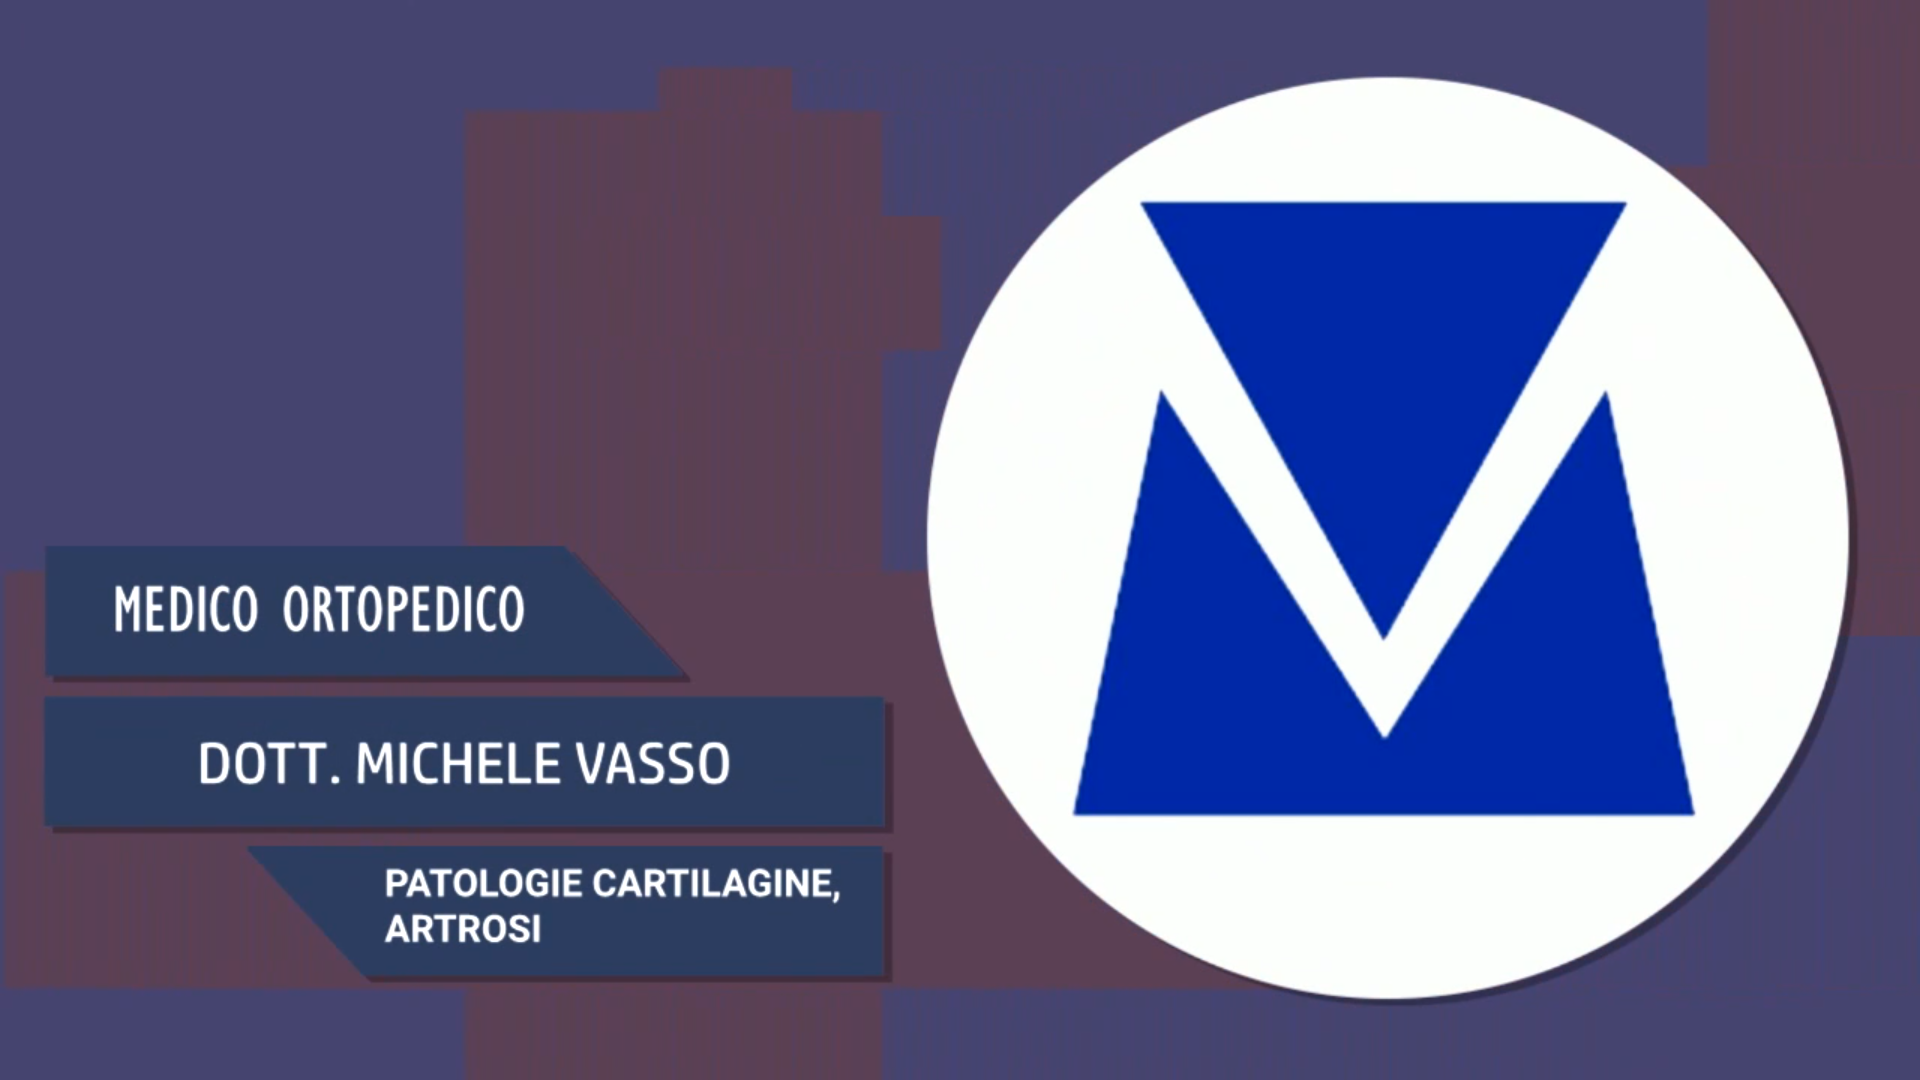 Intervista al Dott. Michele Vasso – Patologie cartilagine, artrosi